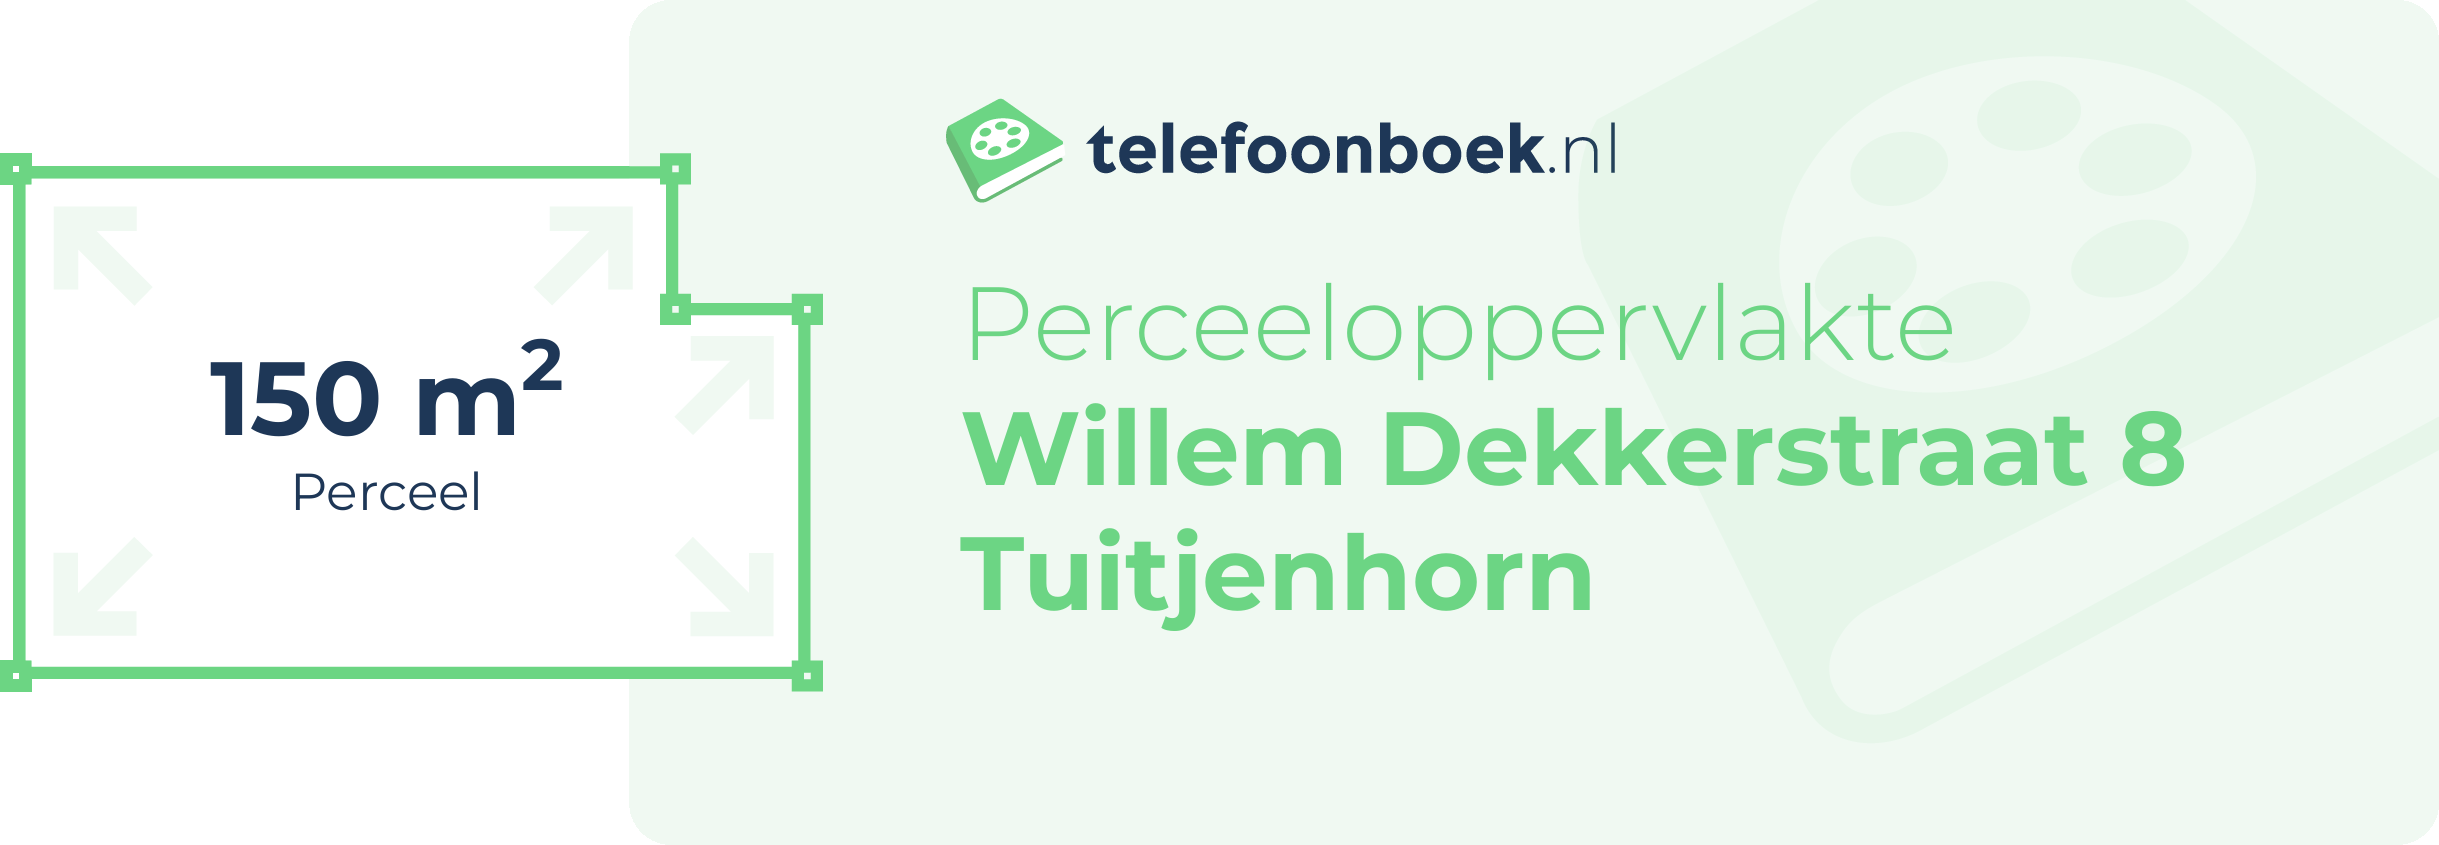 Perceeloppervlakte Willem Dekkerstraat 8 Tuitjenhorn